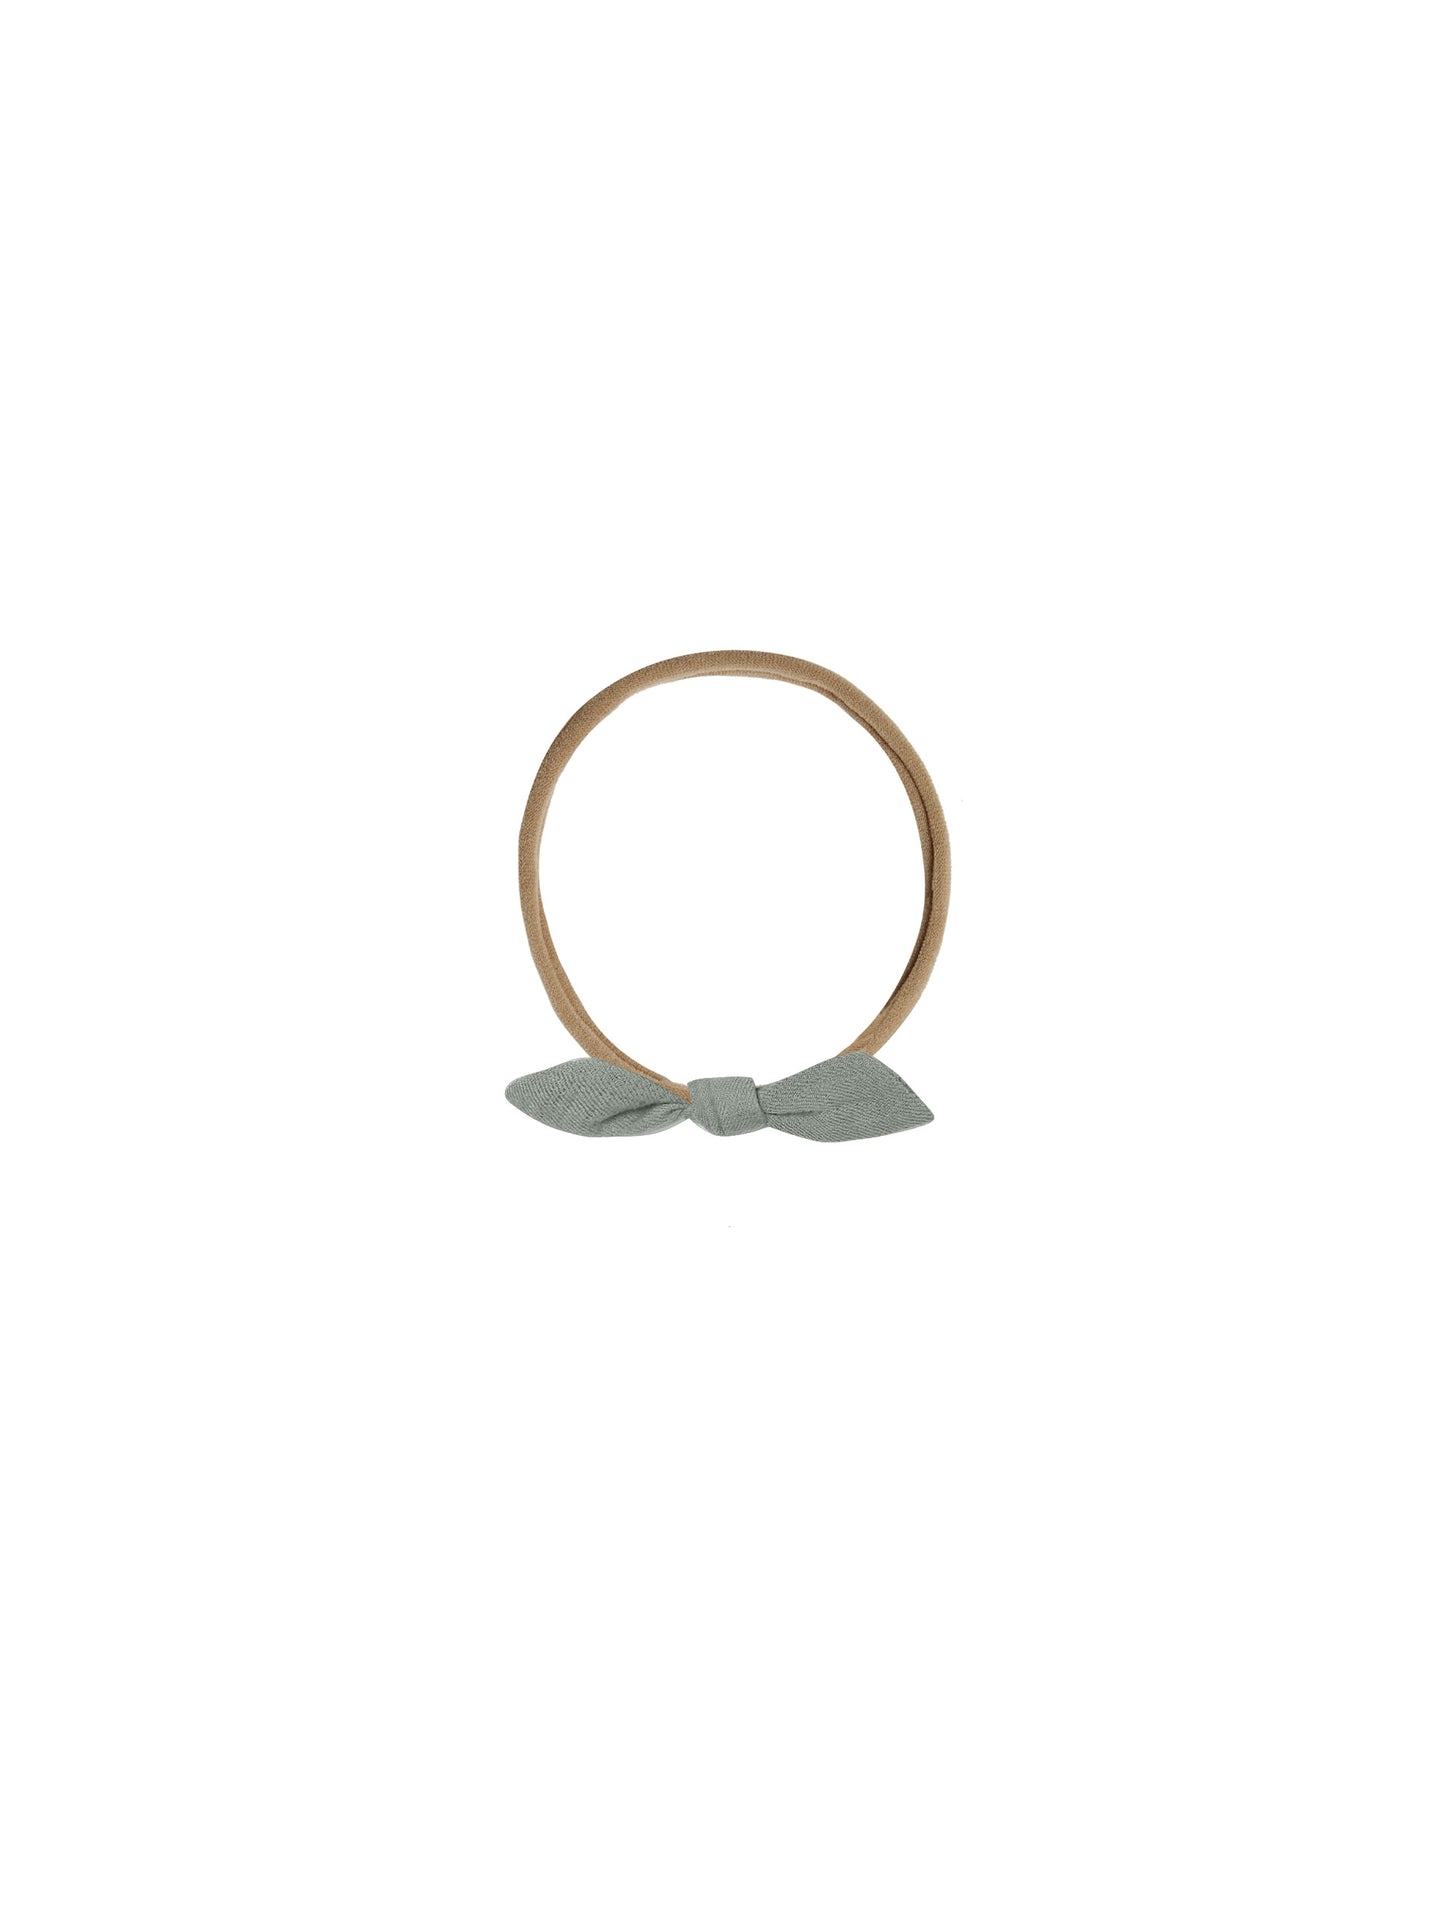 Quincy Mae - Little Knot Headband - Sea Green - LAST ONE